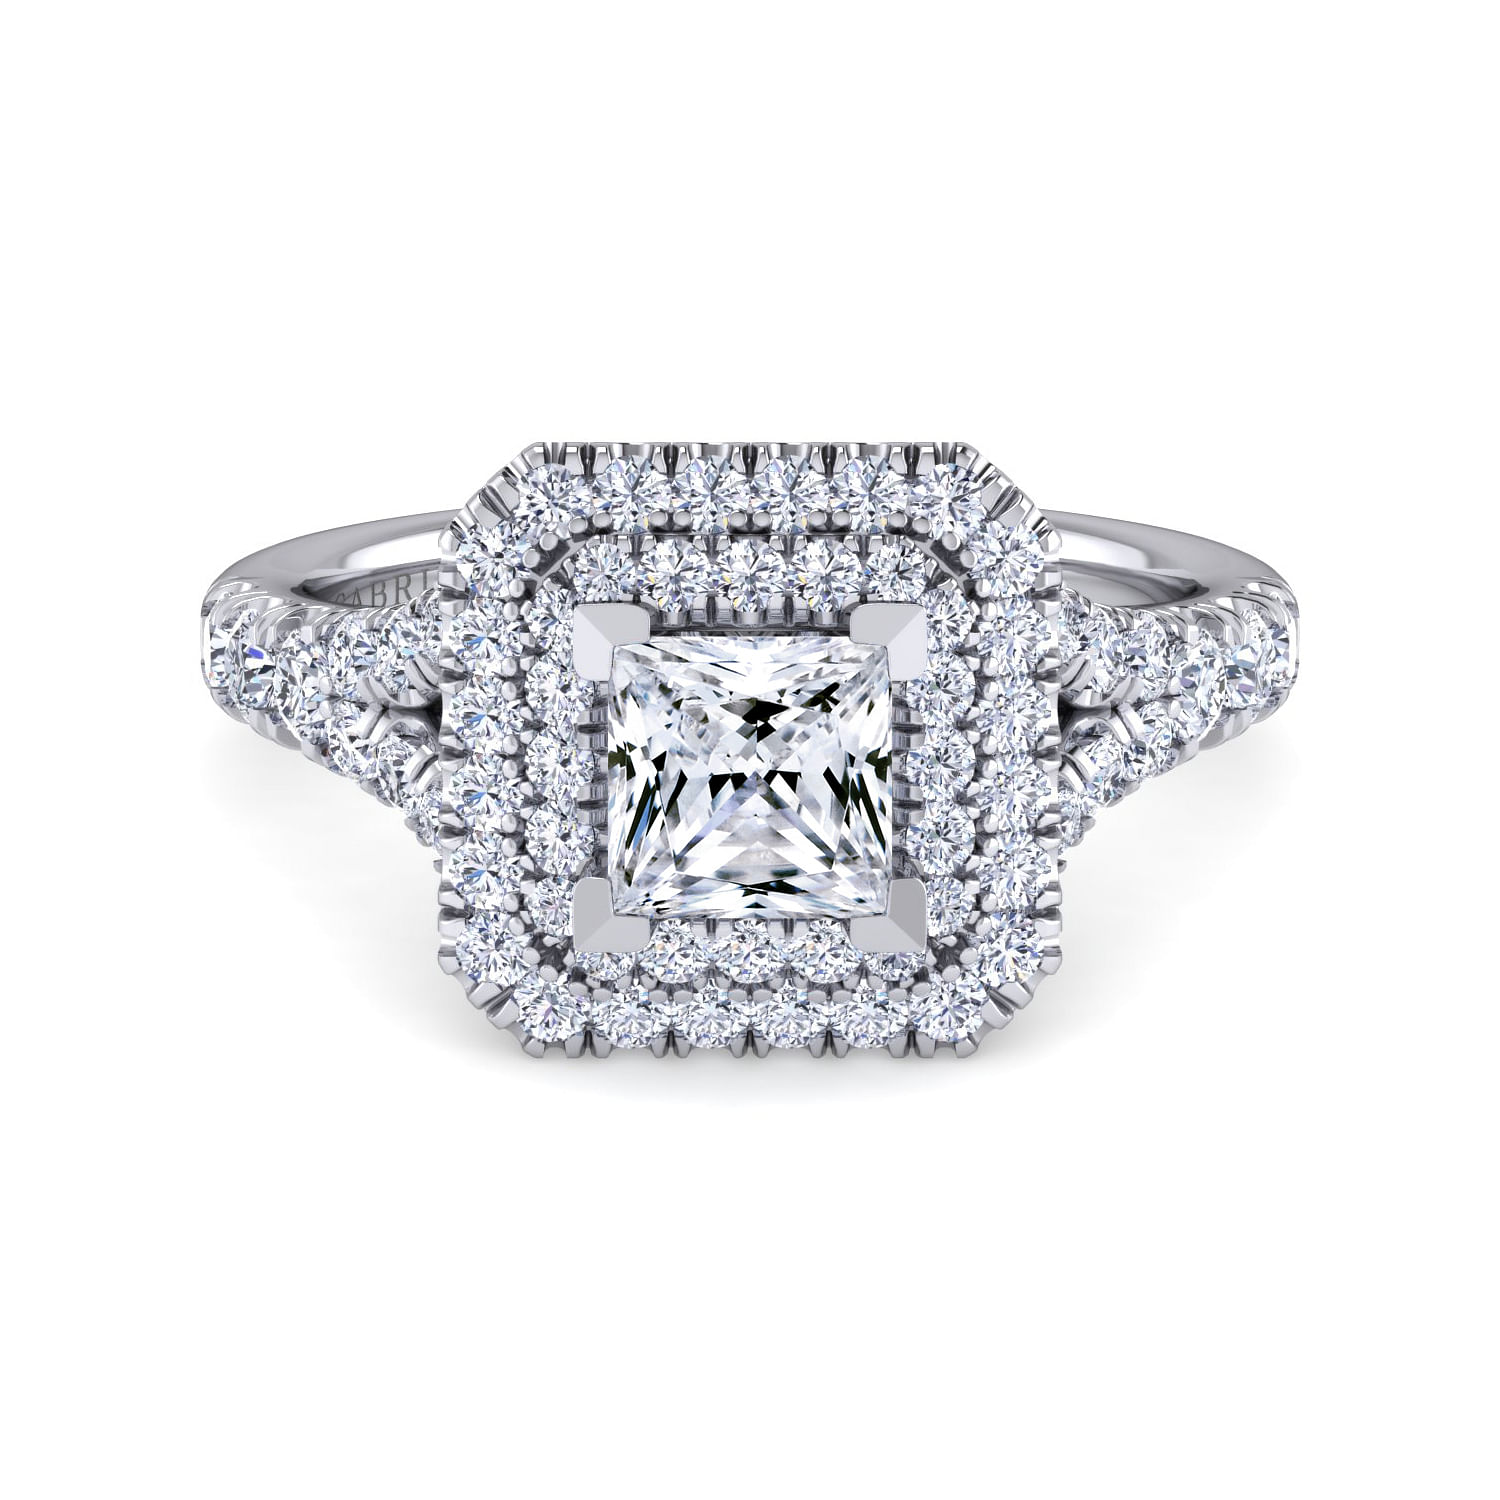 Lexie---14K-White-Gold-Princess-Cut-Double-Halo-Diamond-Engagement-Ring1